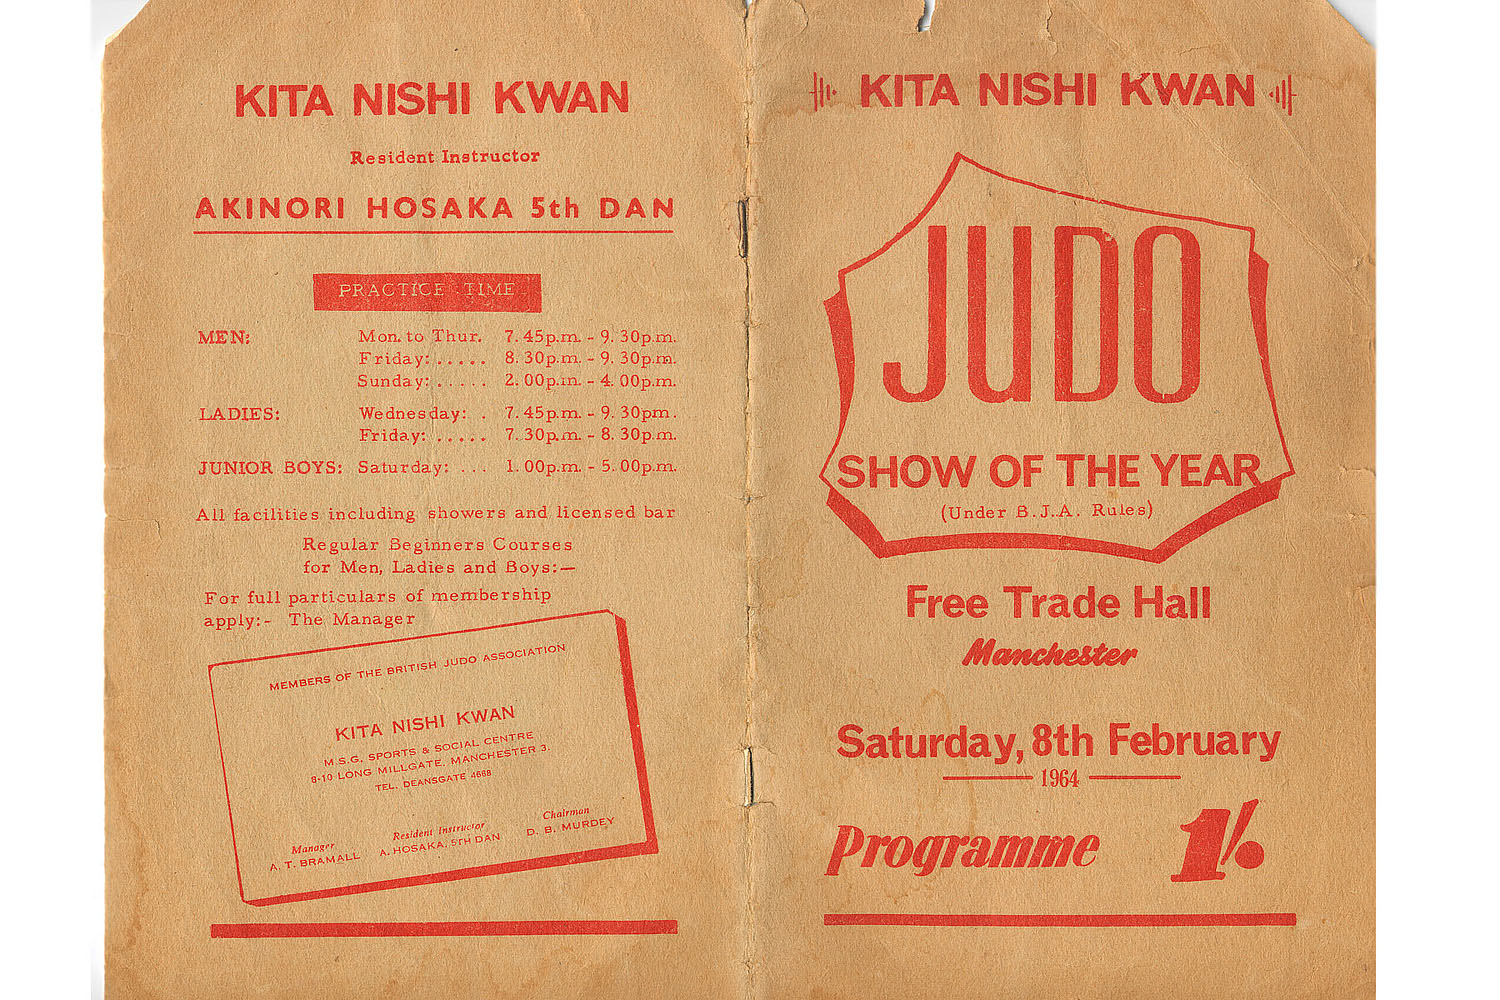  Kita Nishi Kwan - Northwest Judo School show at the Free Tarde Hall, Manchester 1964 